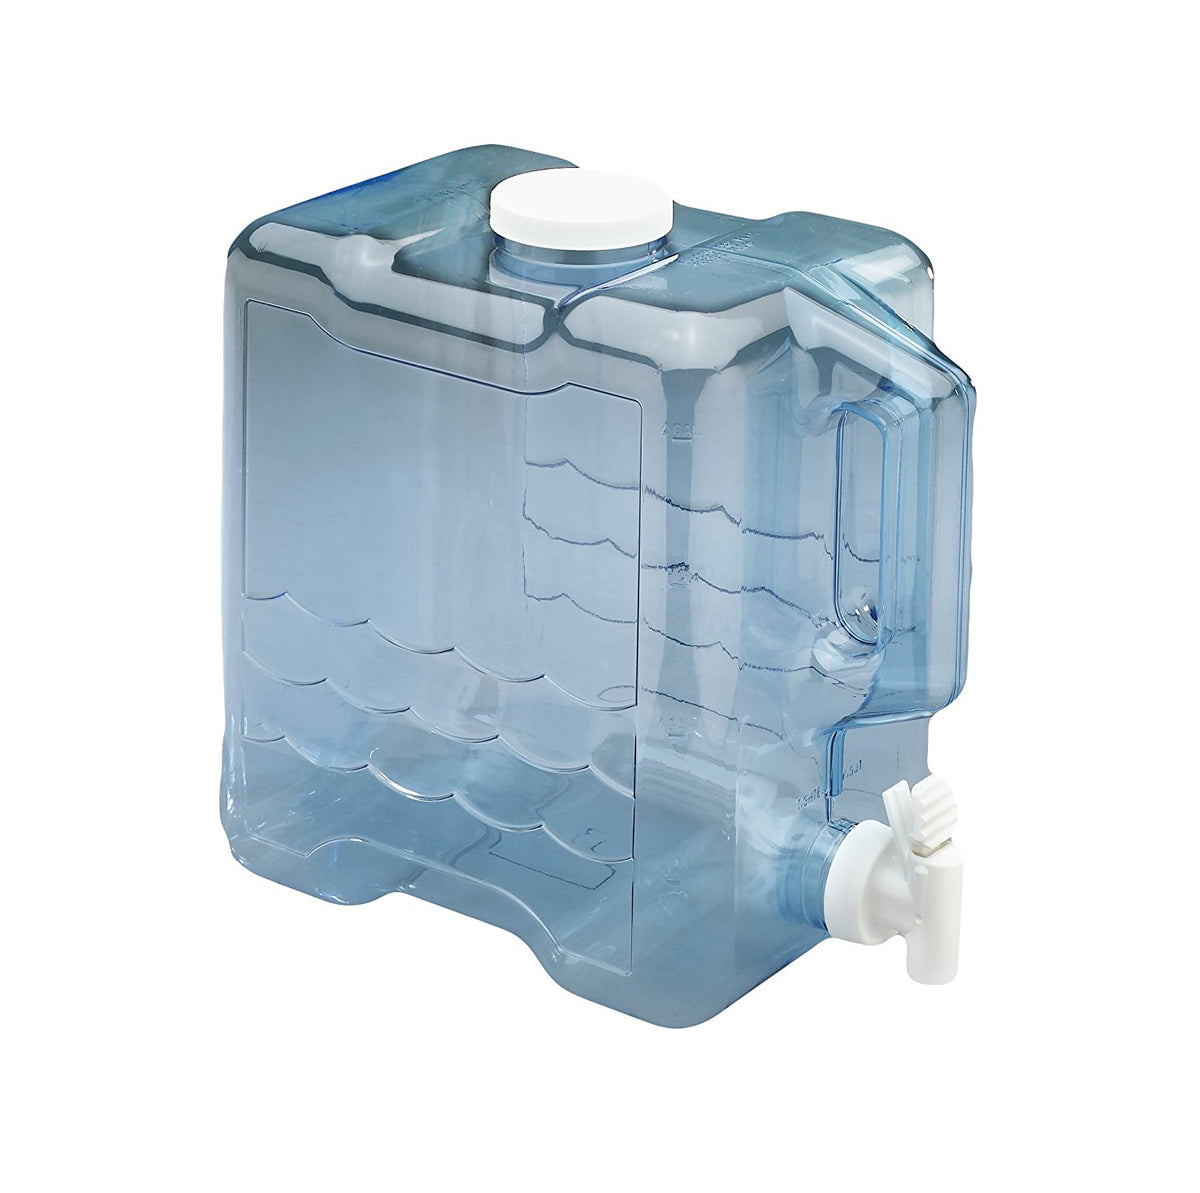 Arrow Plastic 00743 Refillable Beverage Container, 2 Gallon, Blue Plastic